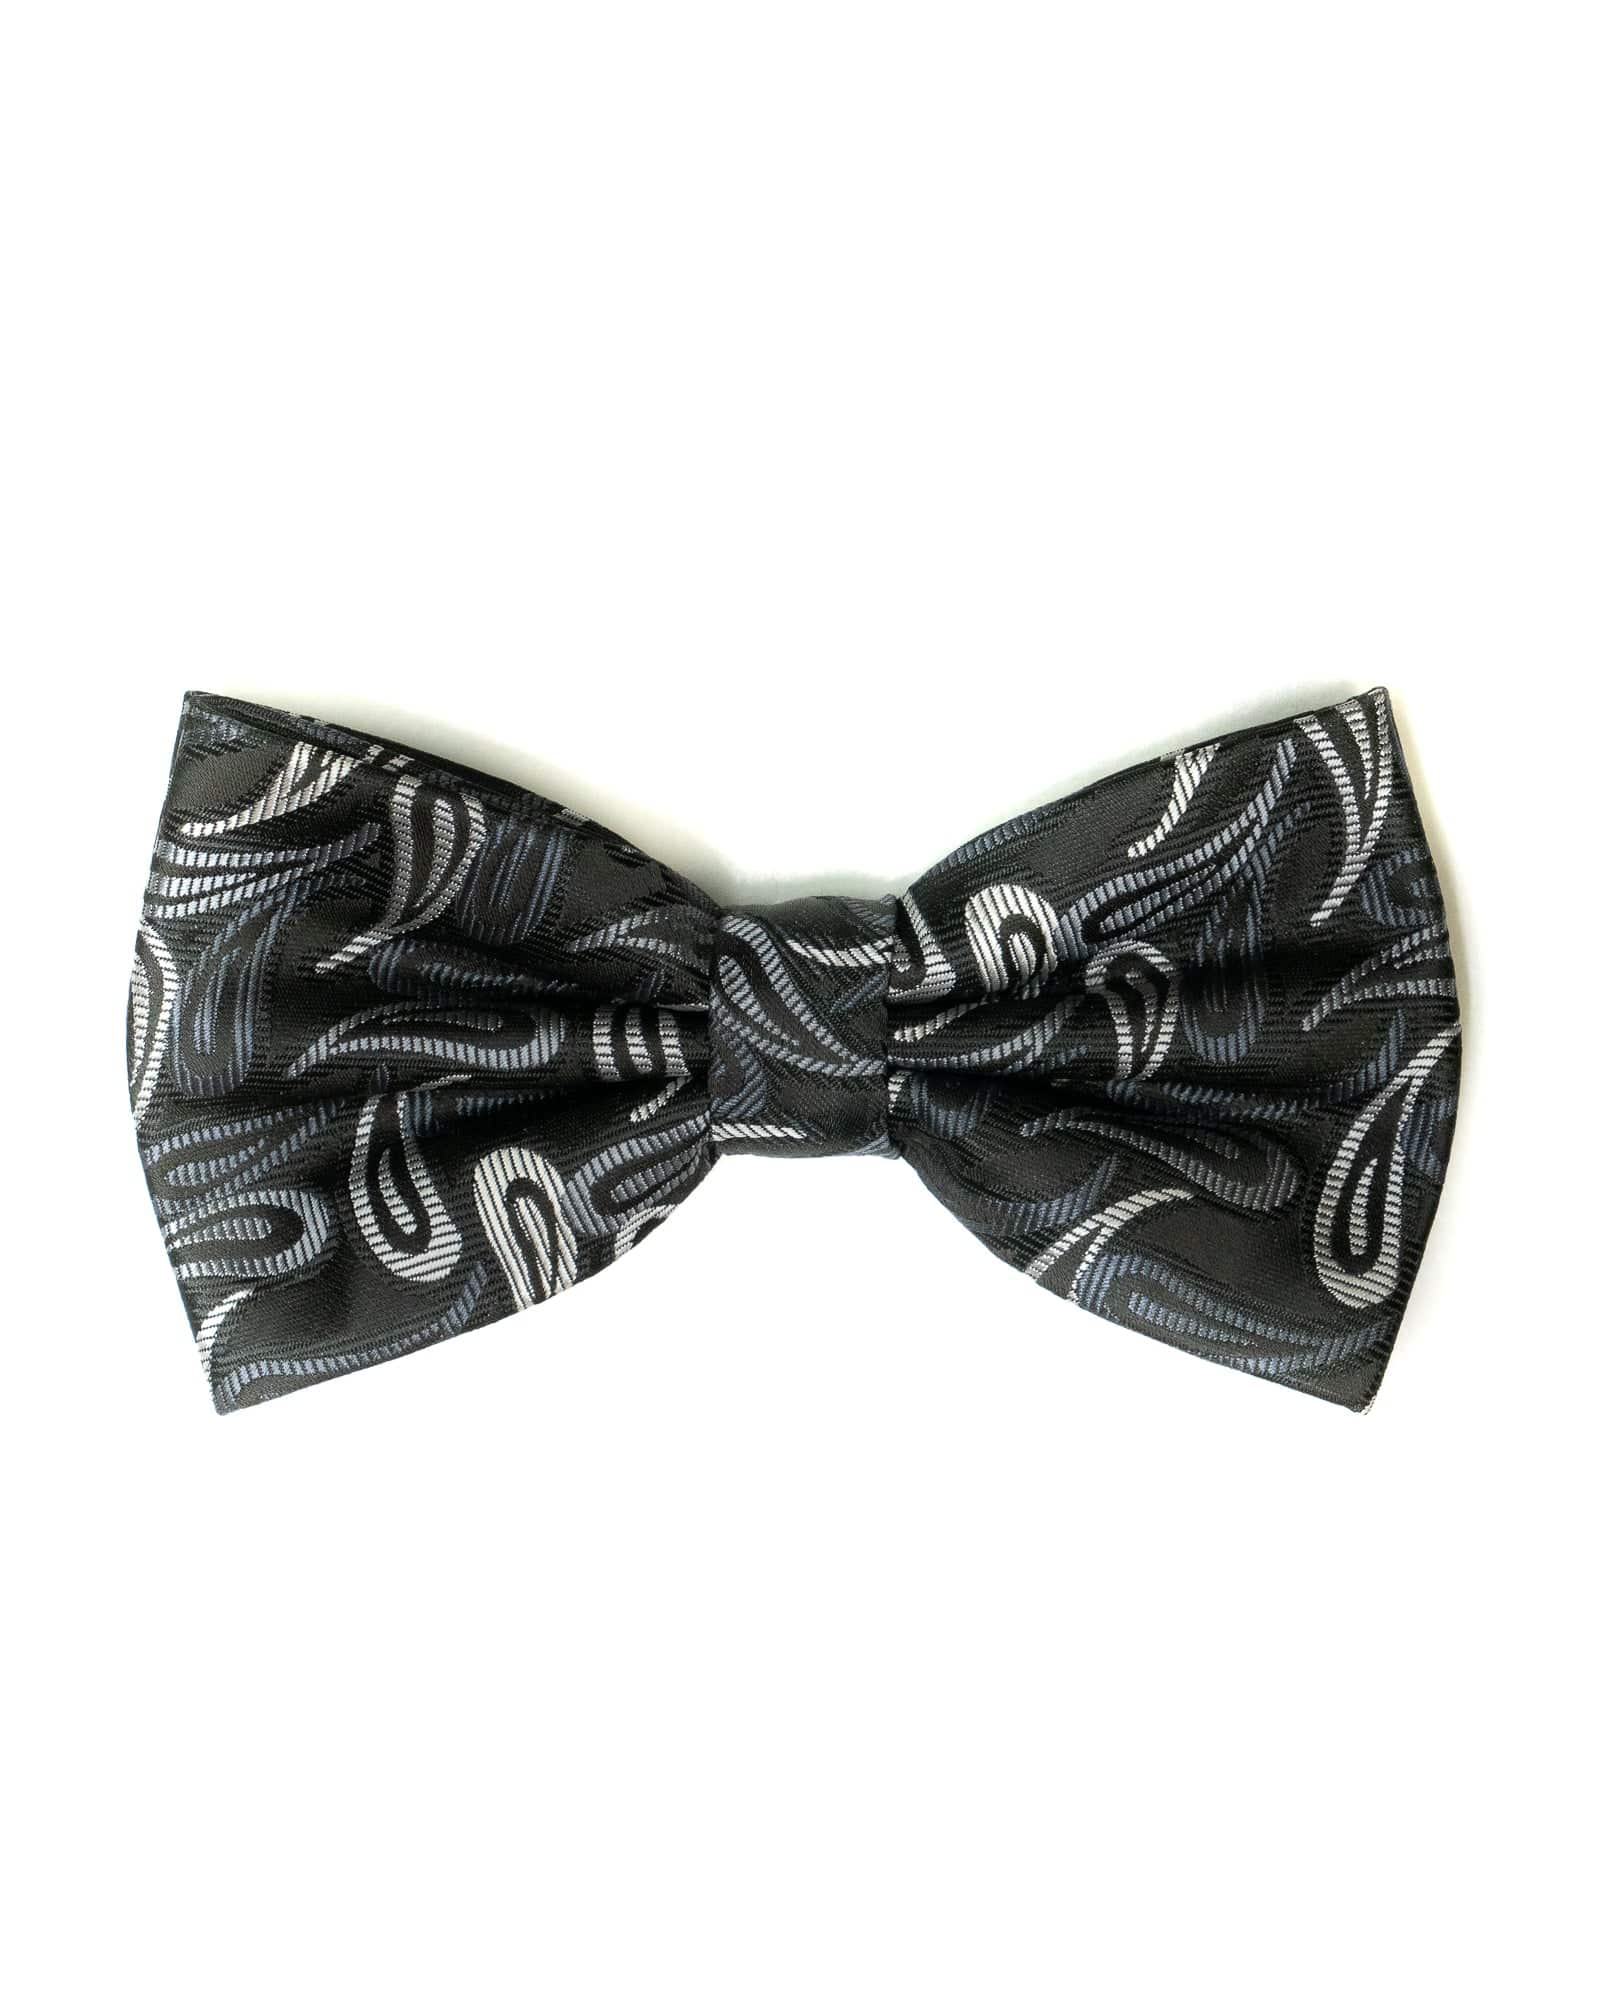 Bow Tie Paisley In Black & Grey - Rainwater's Men's Clothing and Tuxedo Rental